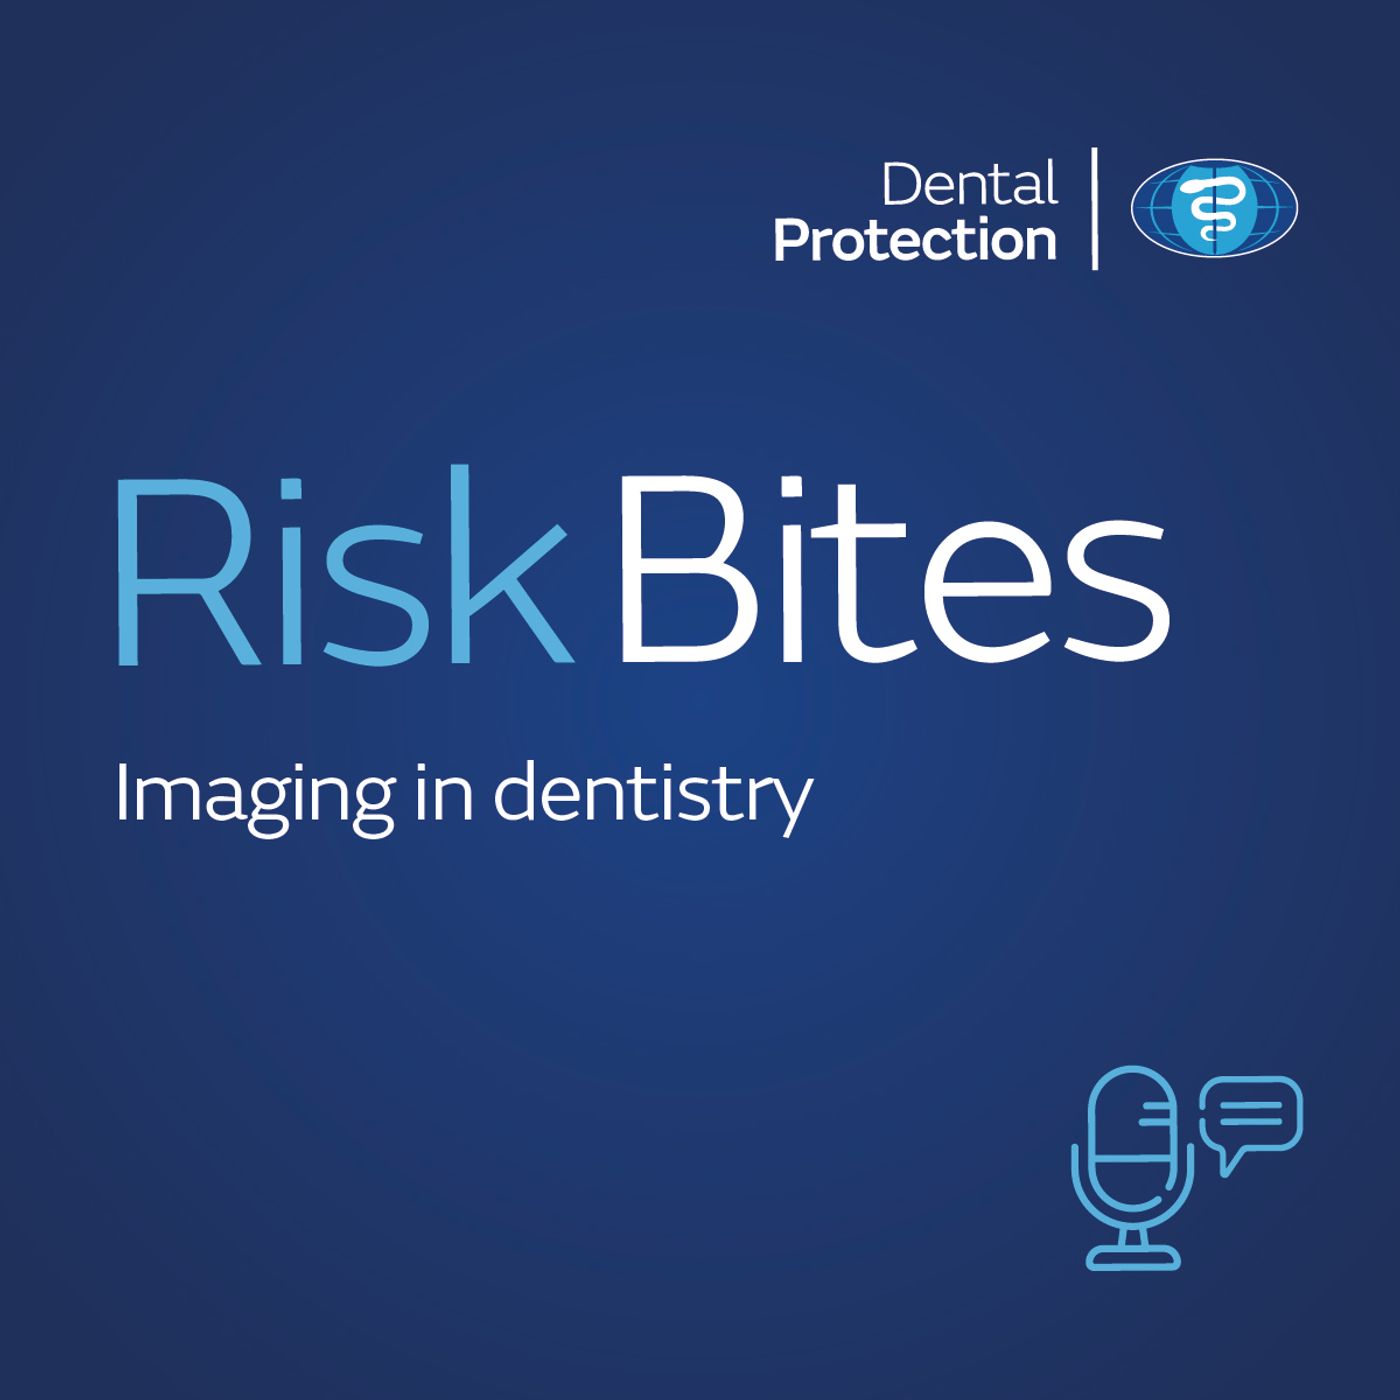 RiskBites: Imaging in dentistry